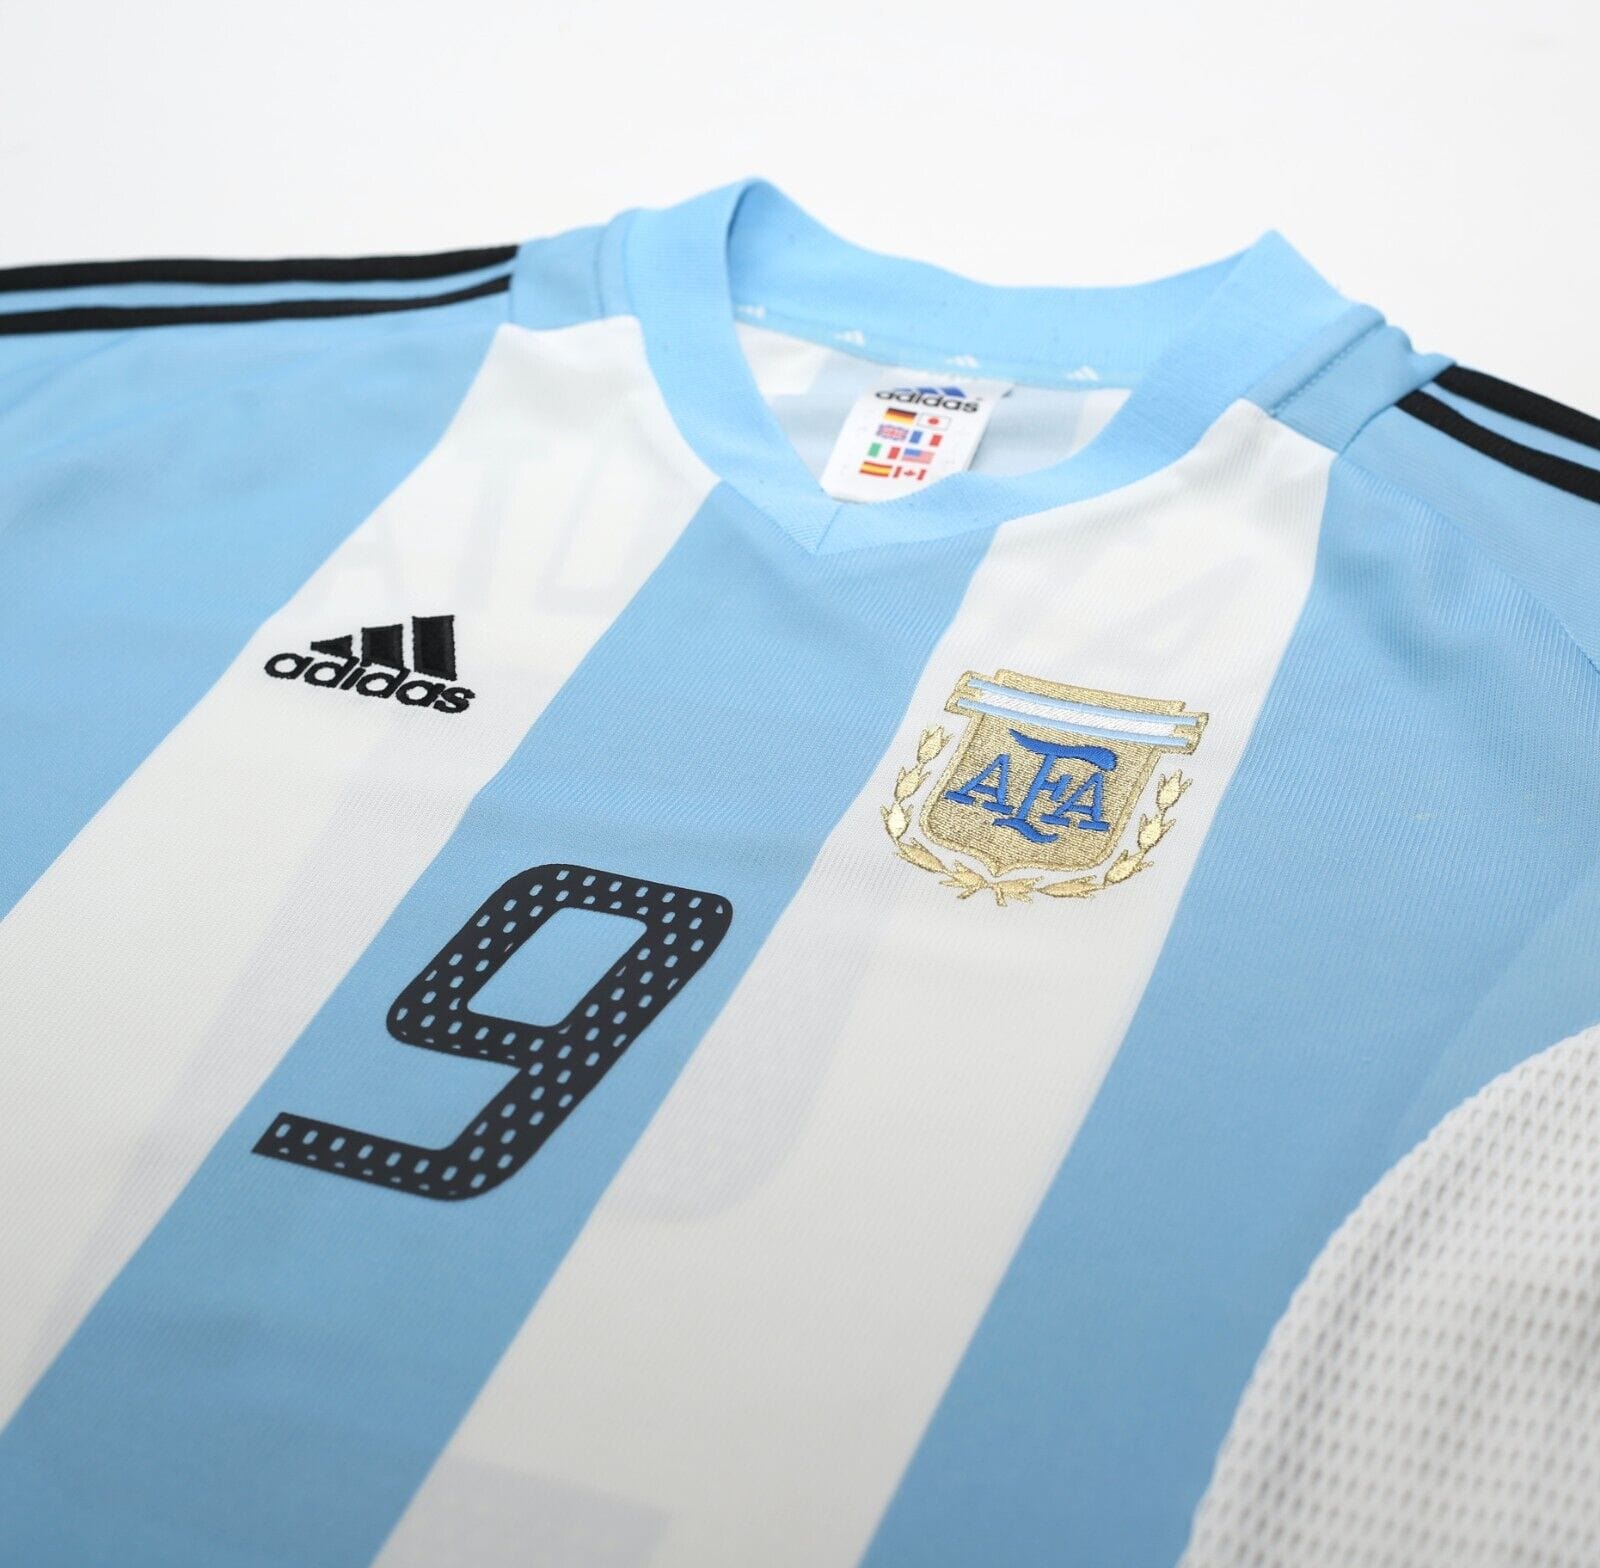 batistuta argentina jersey